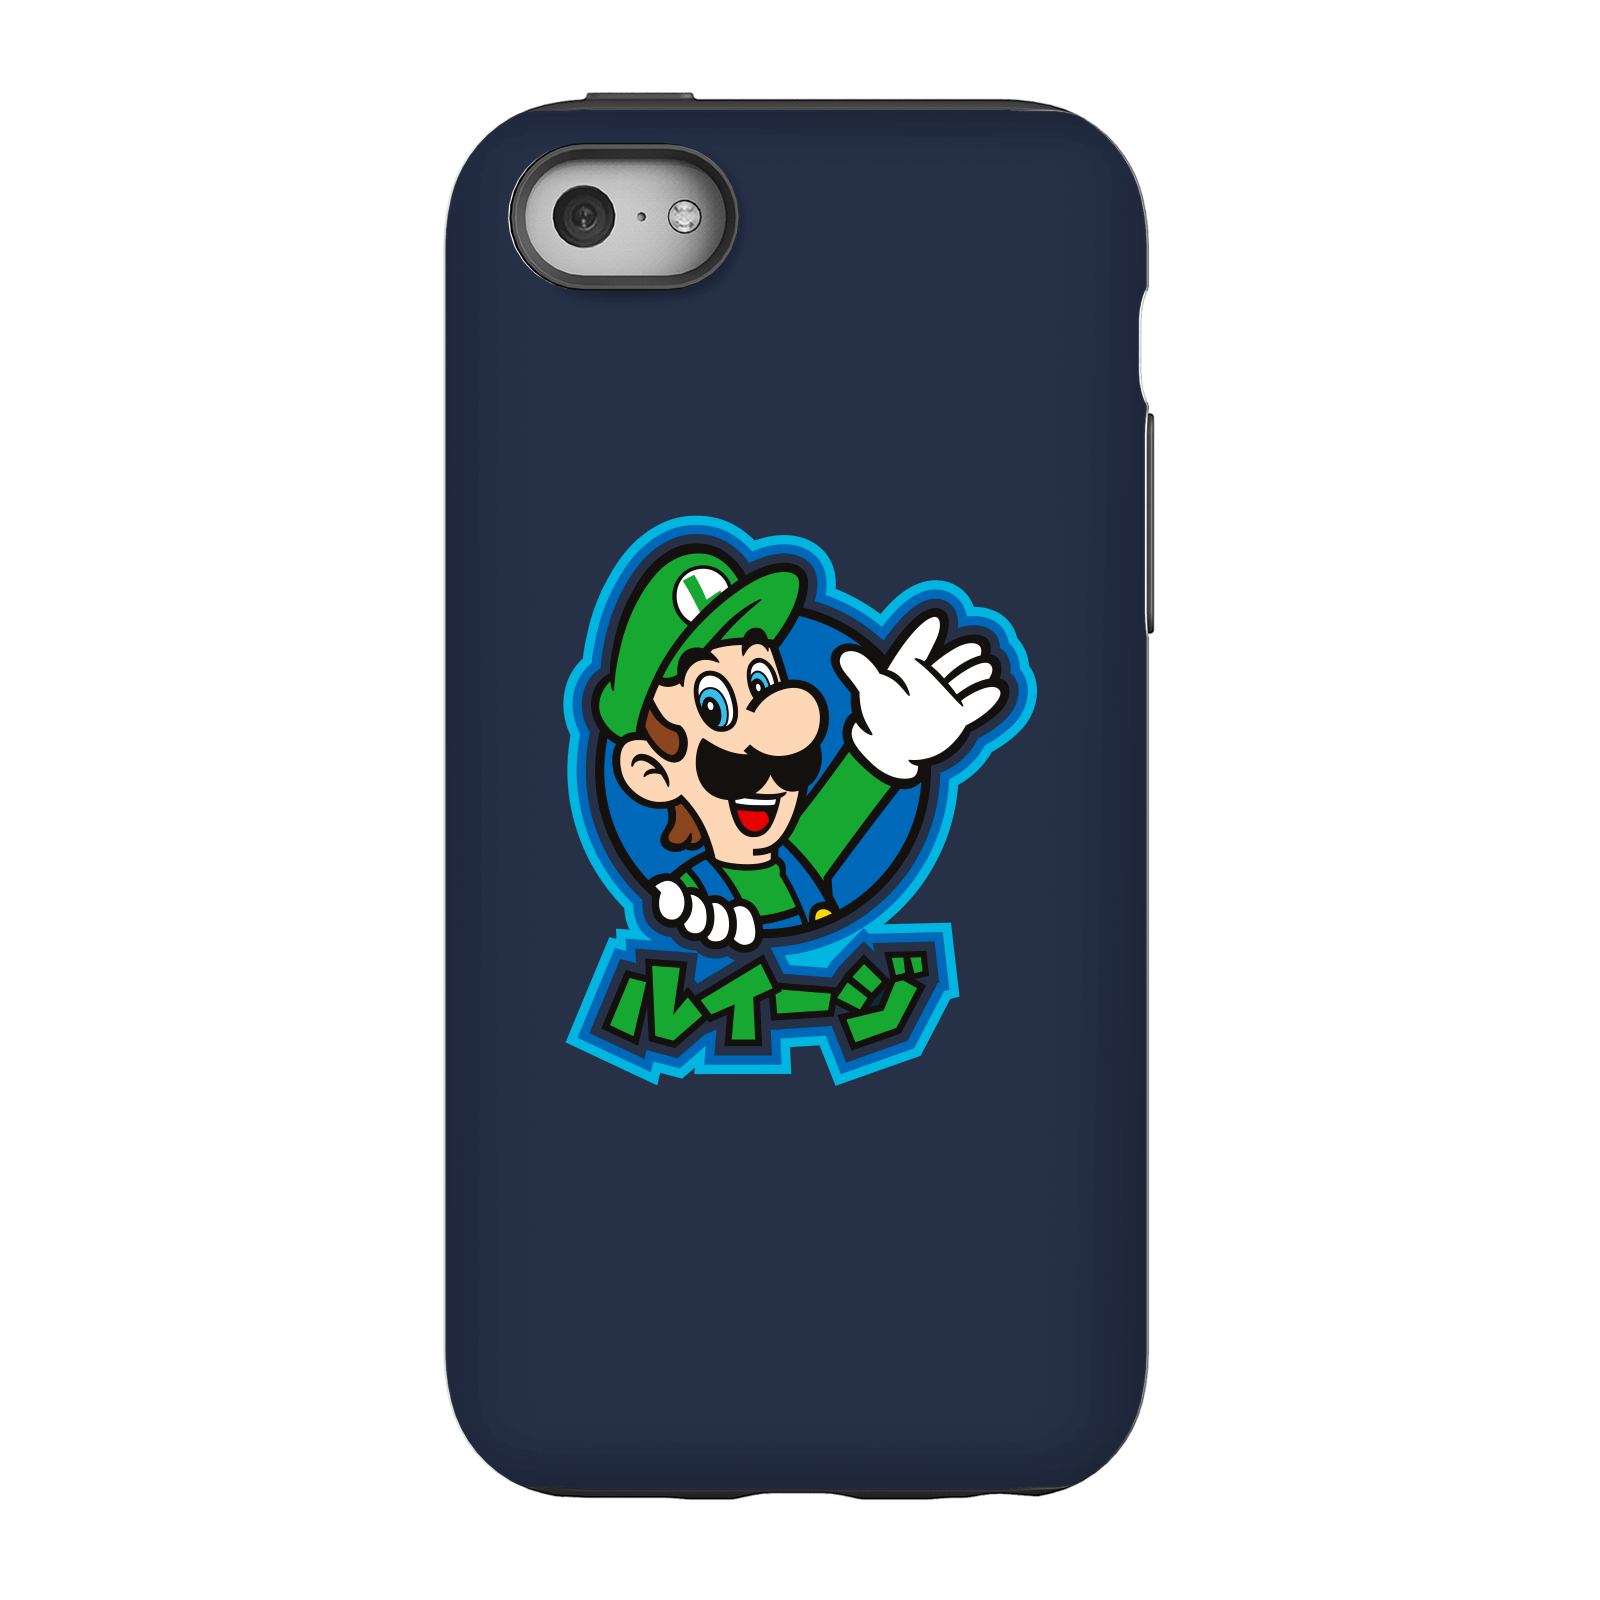 Nintendo Super Mario Luigi Kanji Phone Case - iPhone 5C - Tough Case - Gloss